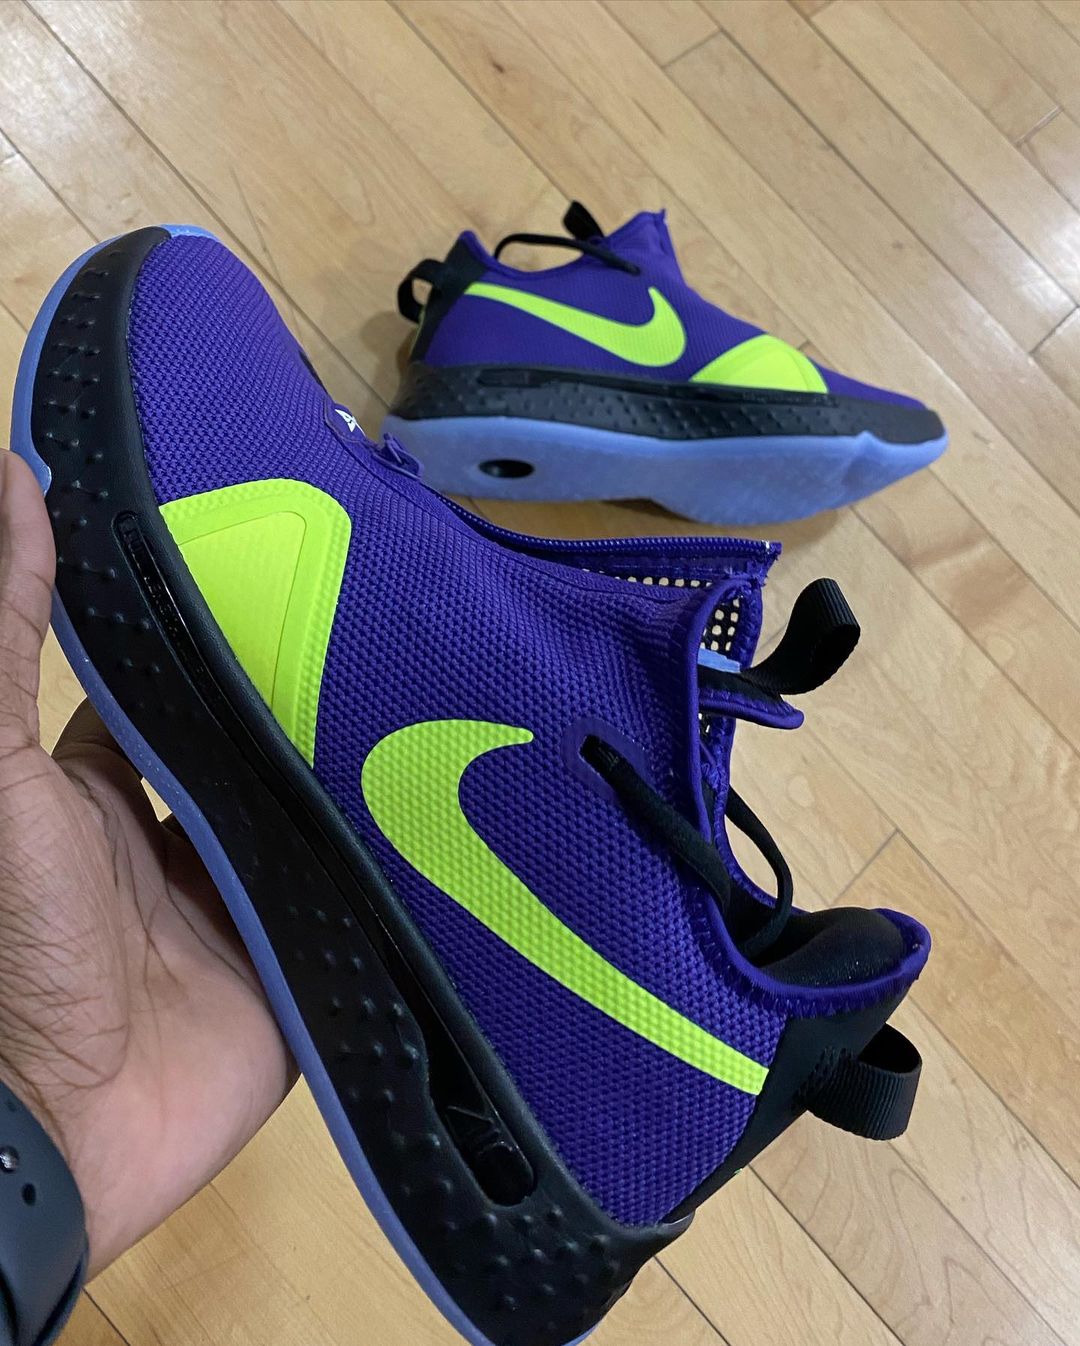 Nike By You iD PG 4 Field Purple Black Volt